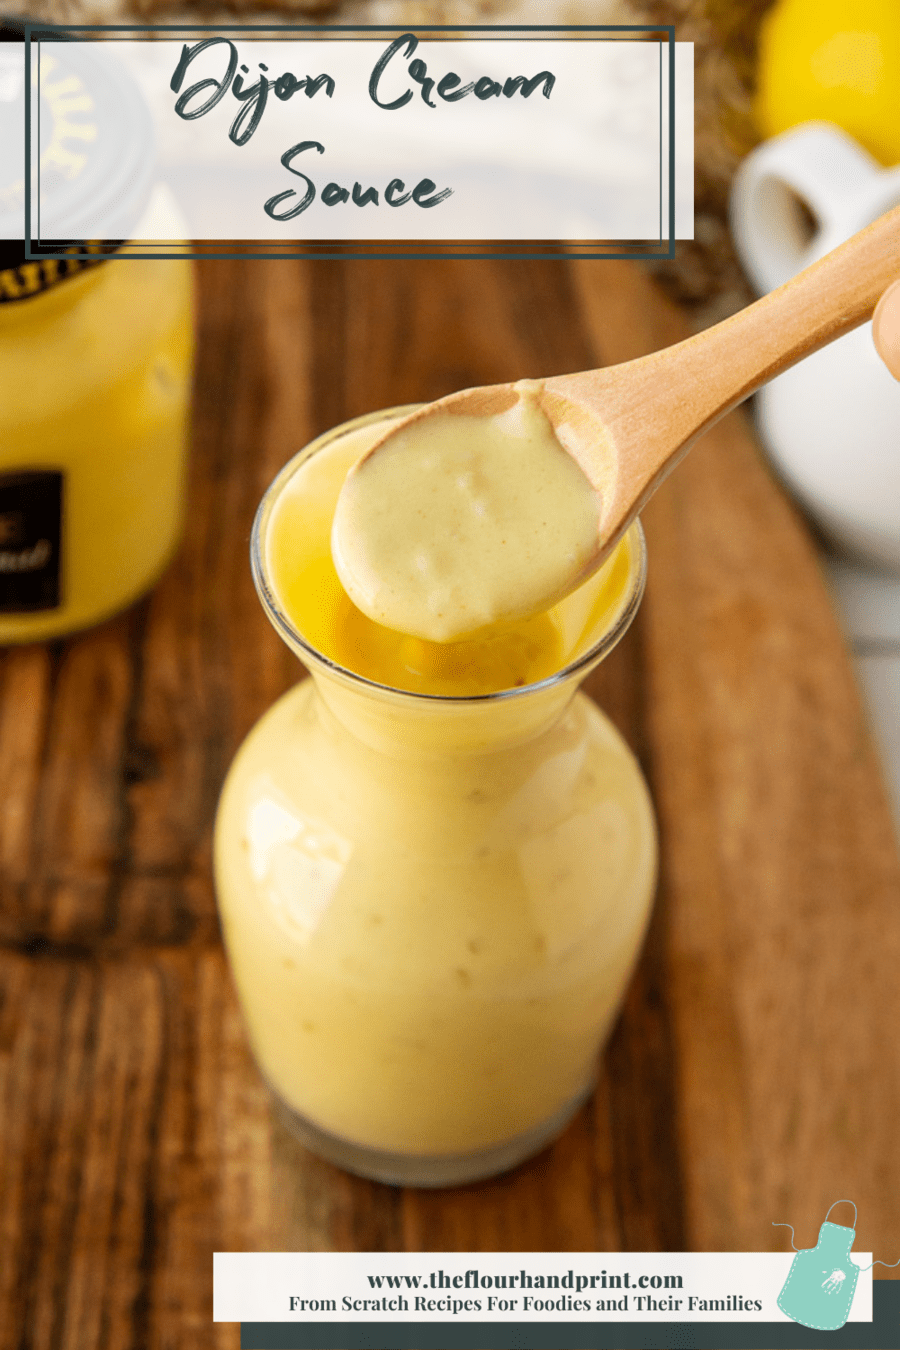 A spoon displaying creamy dijon mustard sauce in a glass jar